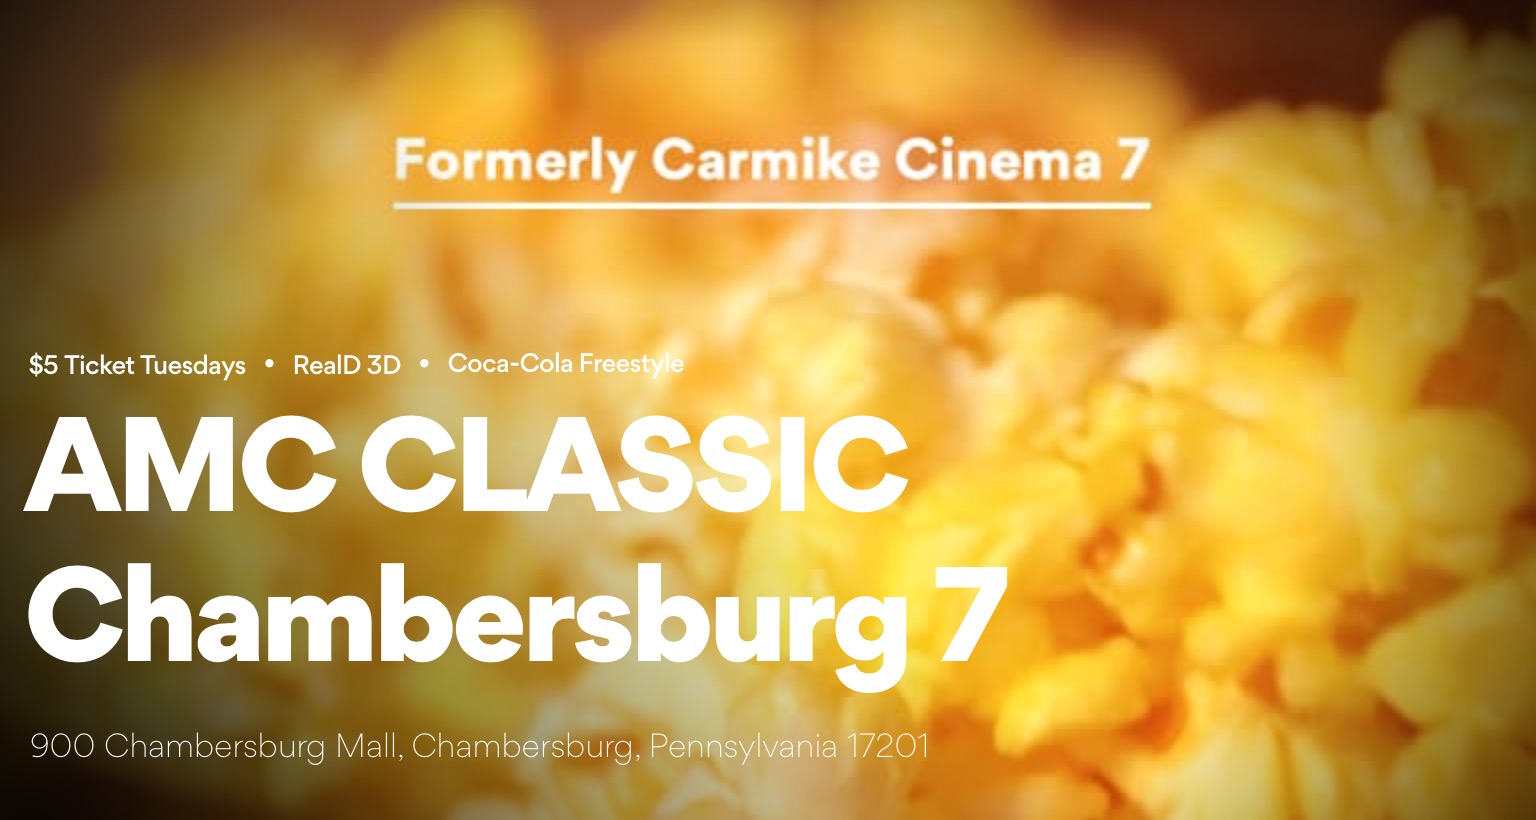 $5 Movie Ticket Tuesday at AMC Classic Chambersburg 7 | Ship Saves1536 x 820